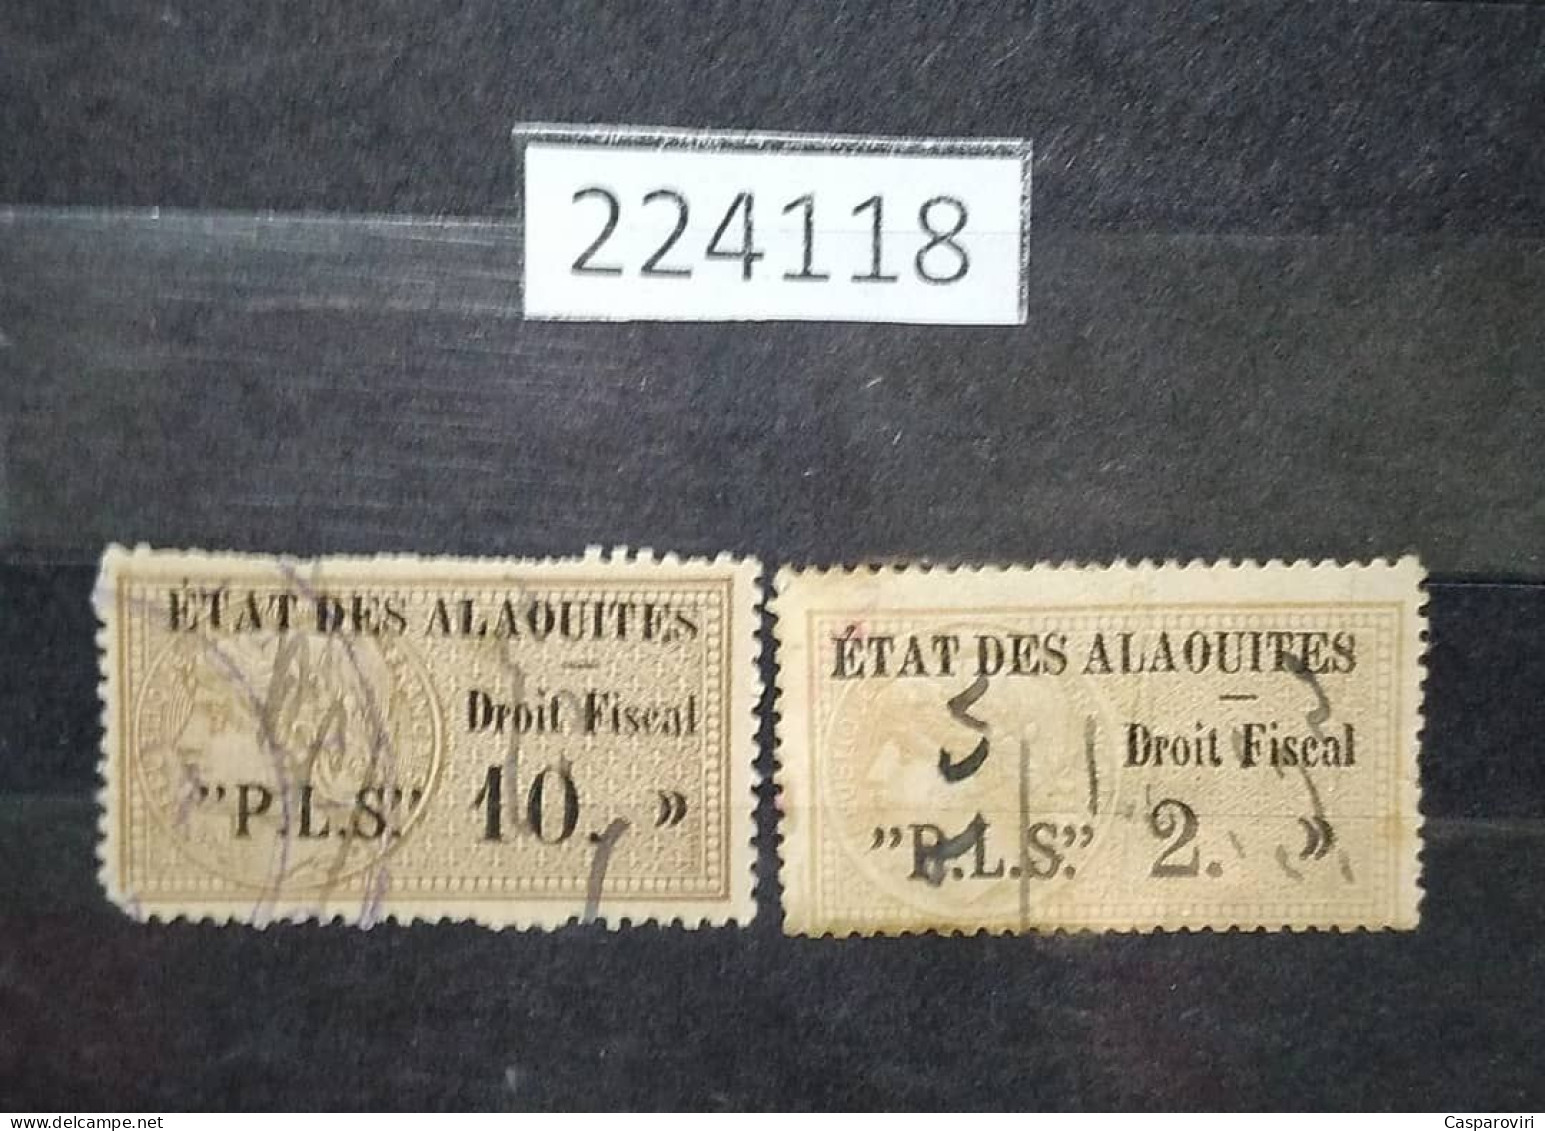 224118; French Colonies; Etat Des Alaouites; 2 Revenue French Stamps 2, 10 P ;Black Overprint Droit Fiscal; USED - Usados